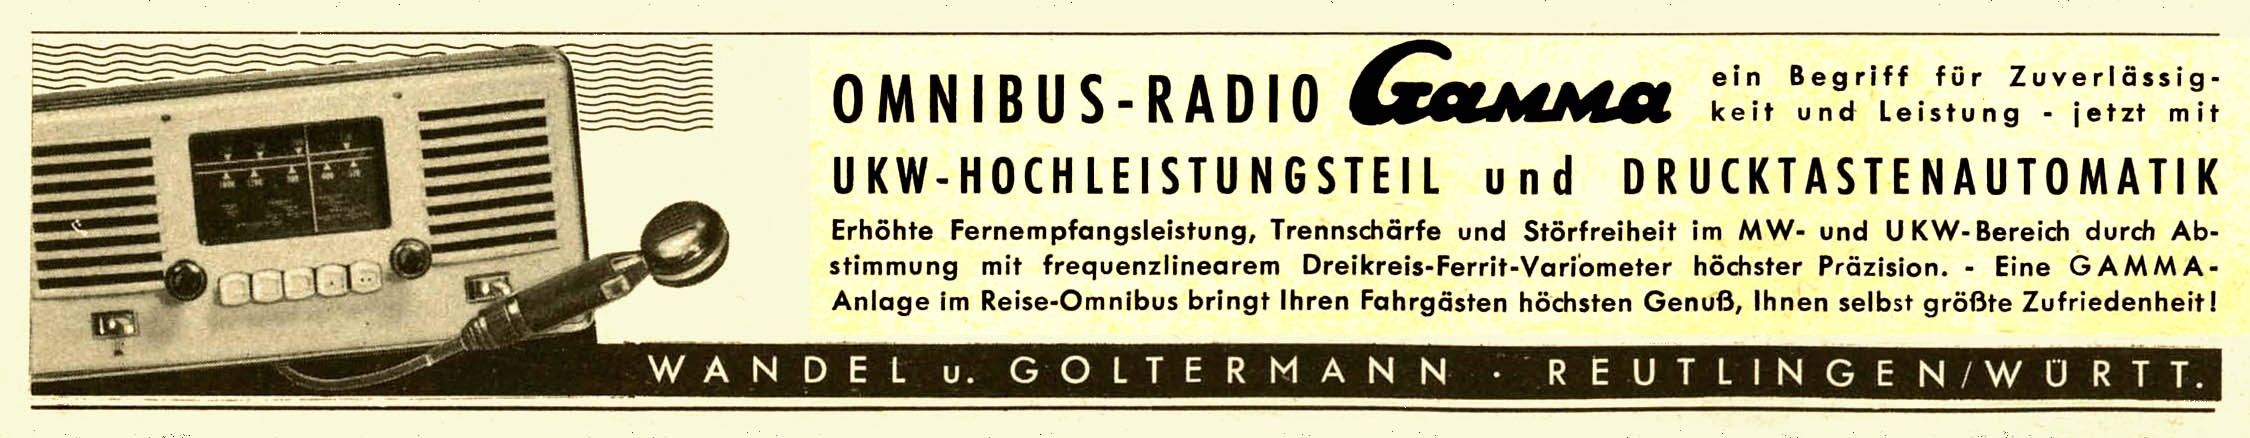 wandel goltermann radio chronik 2 0002